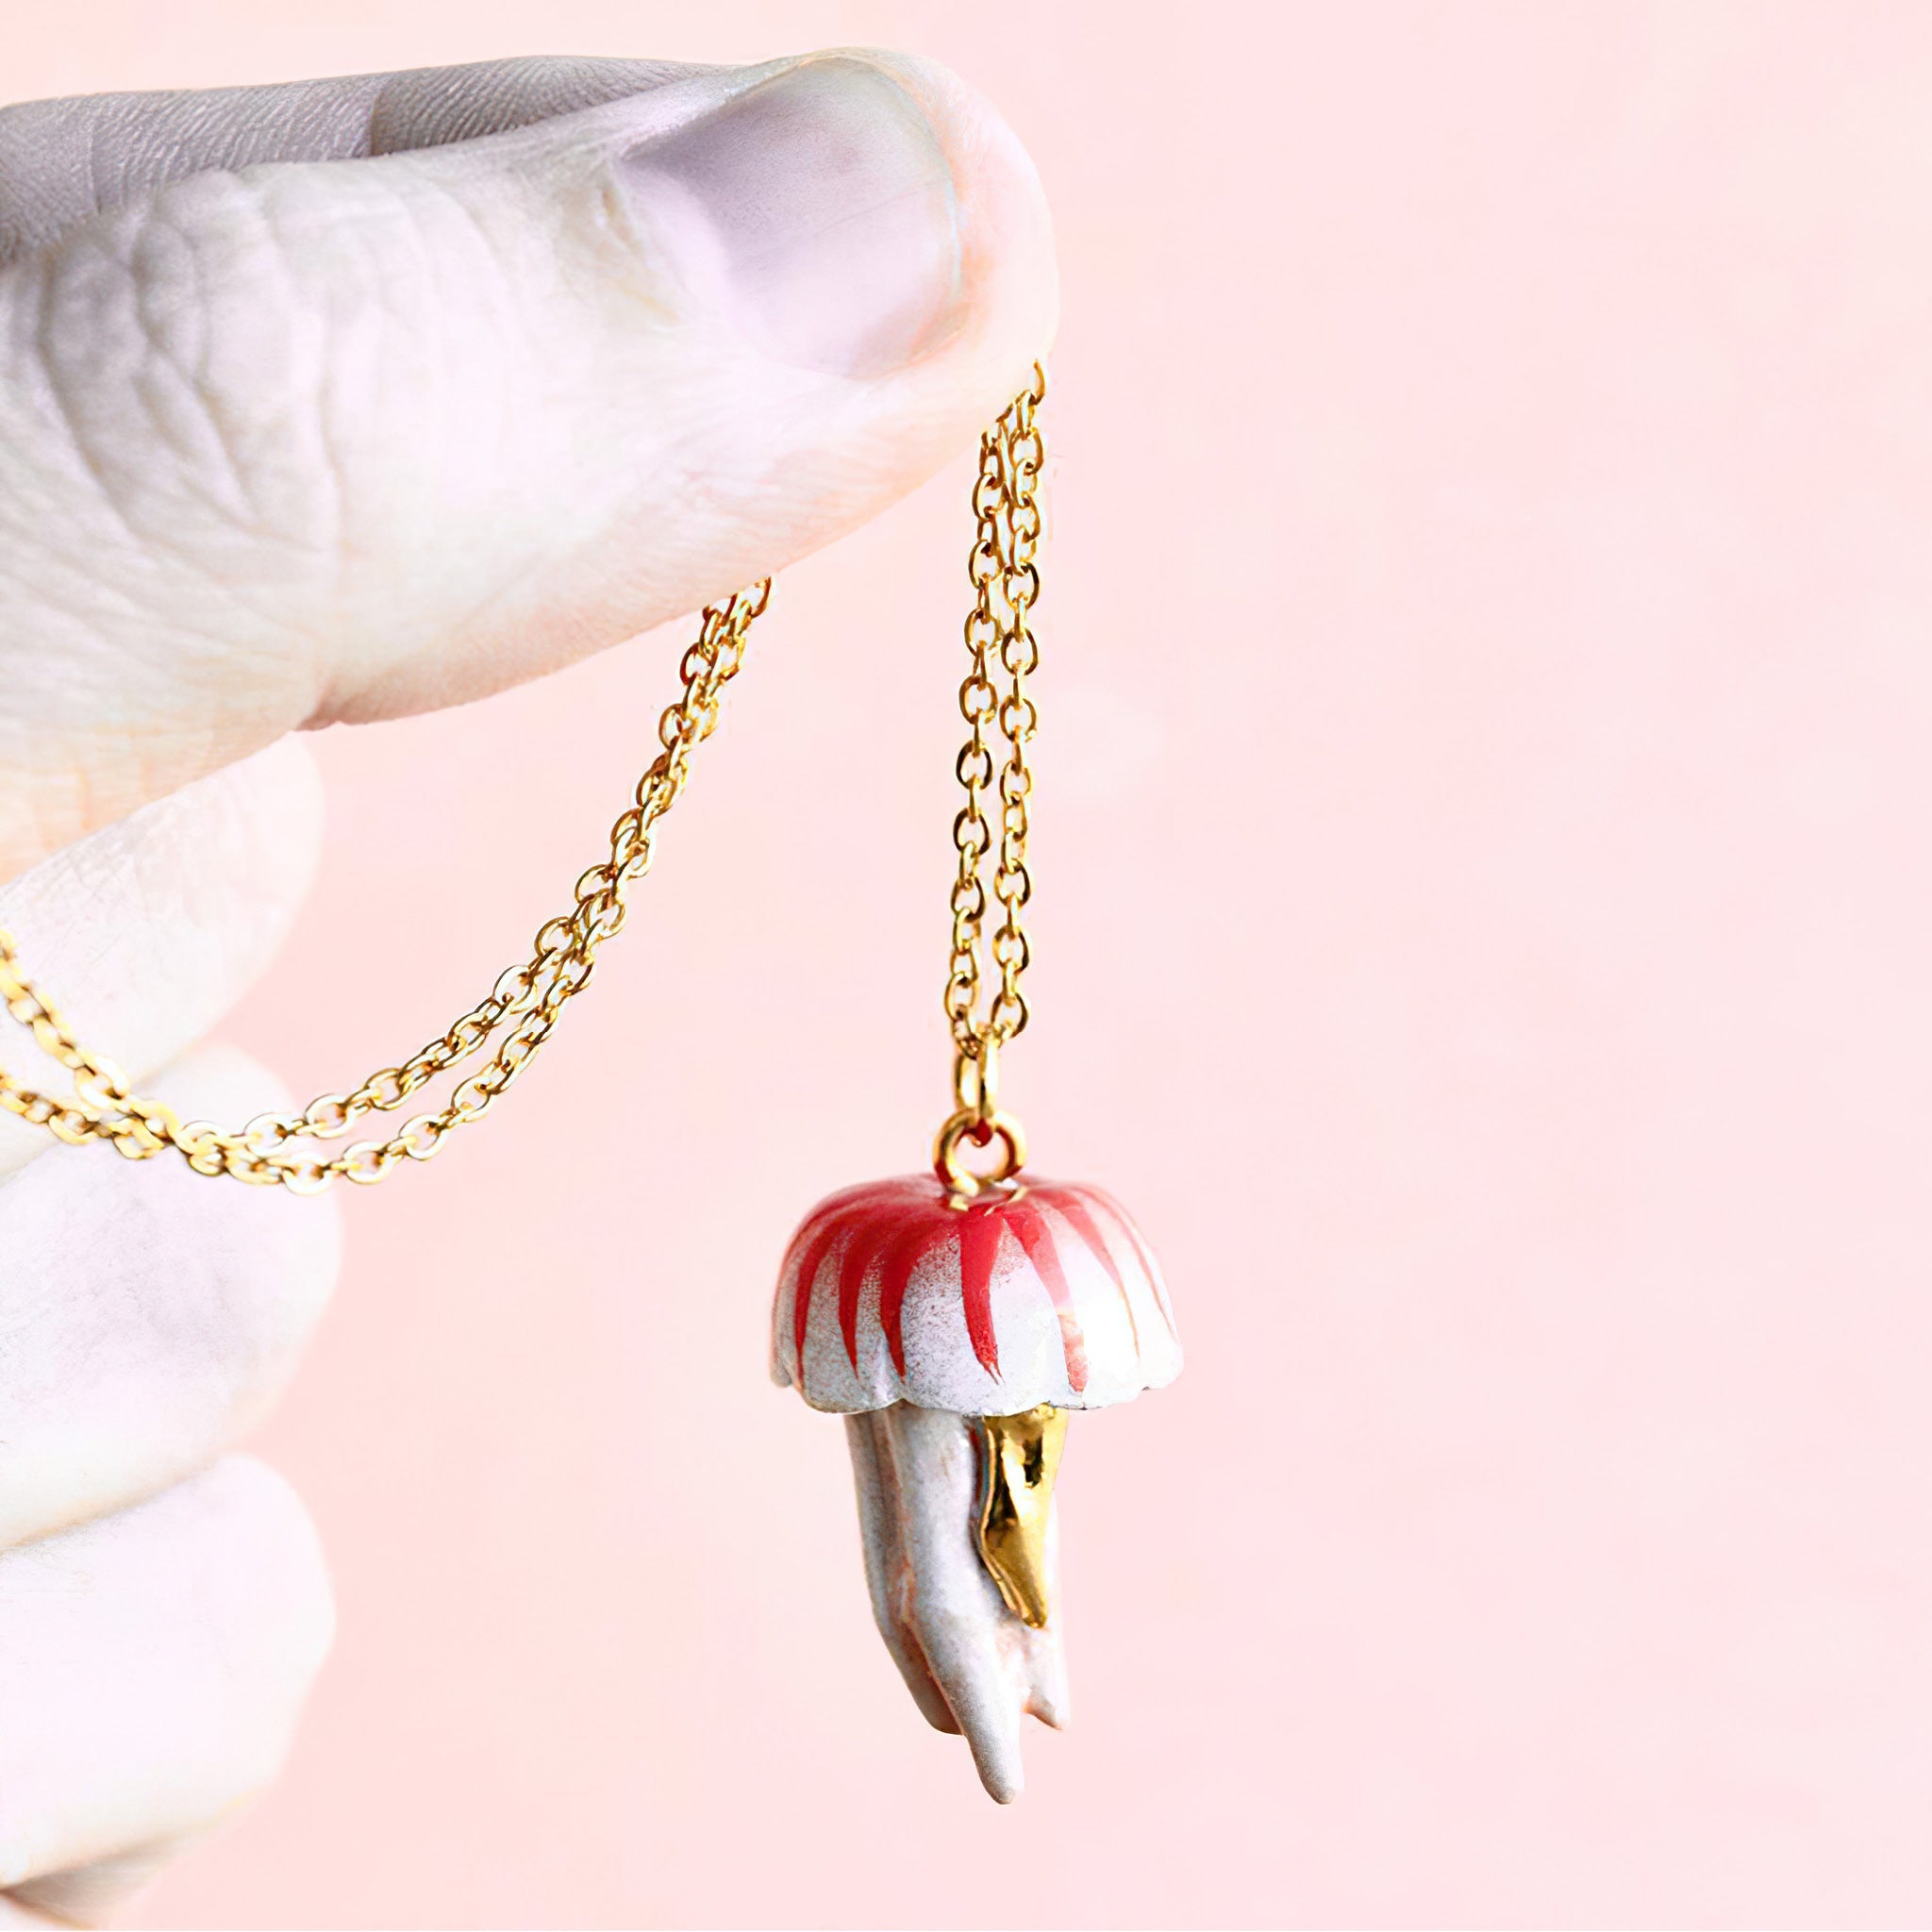 Jellyfish Necklace | Camp Hollow Ceramic Animal Jewelry